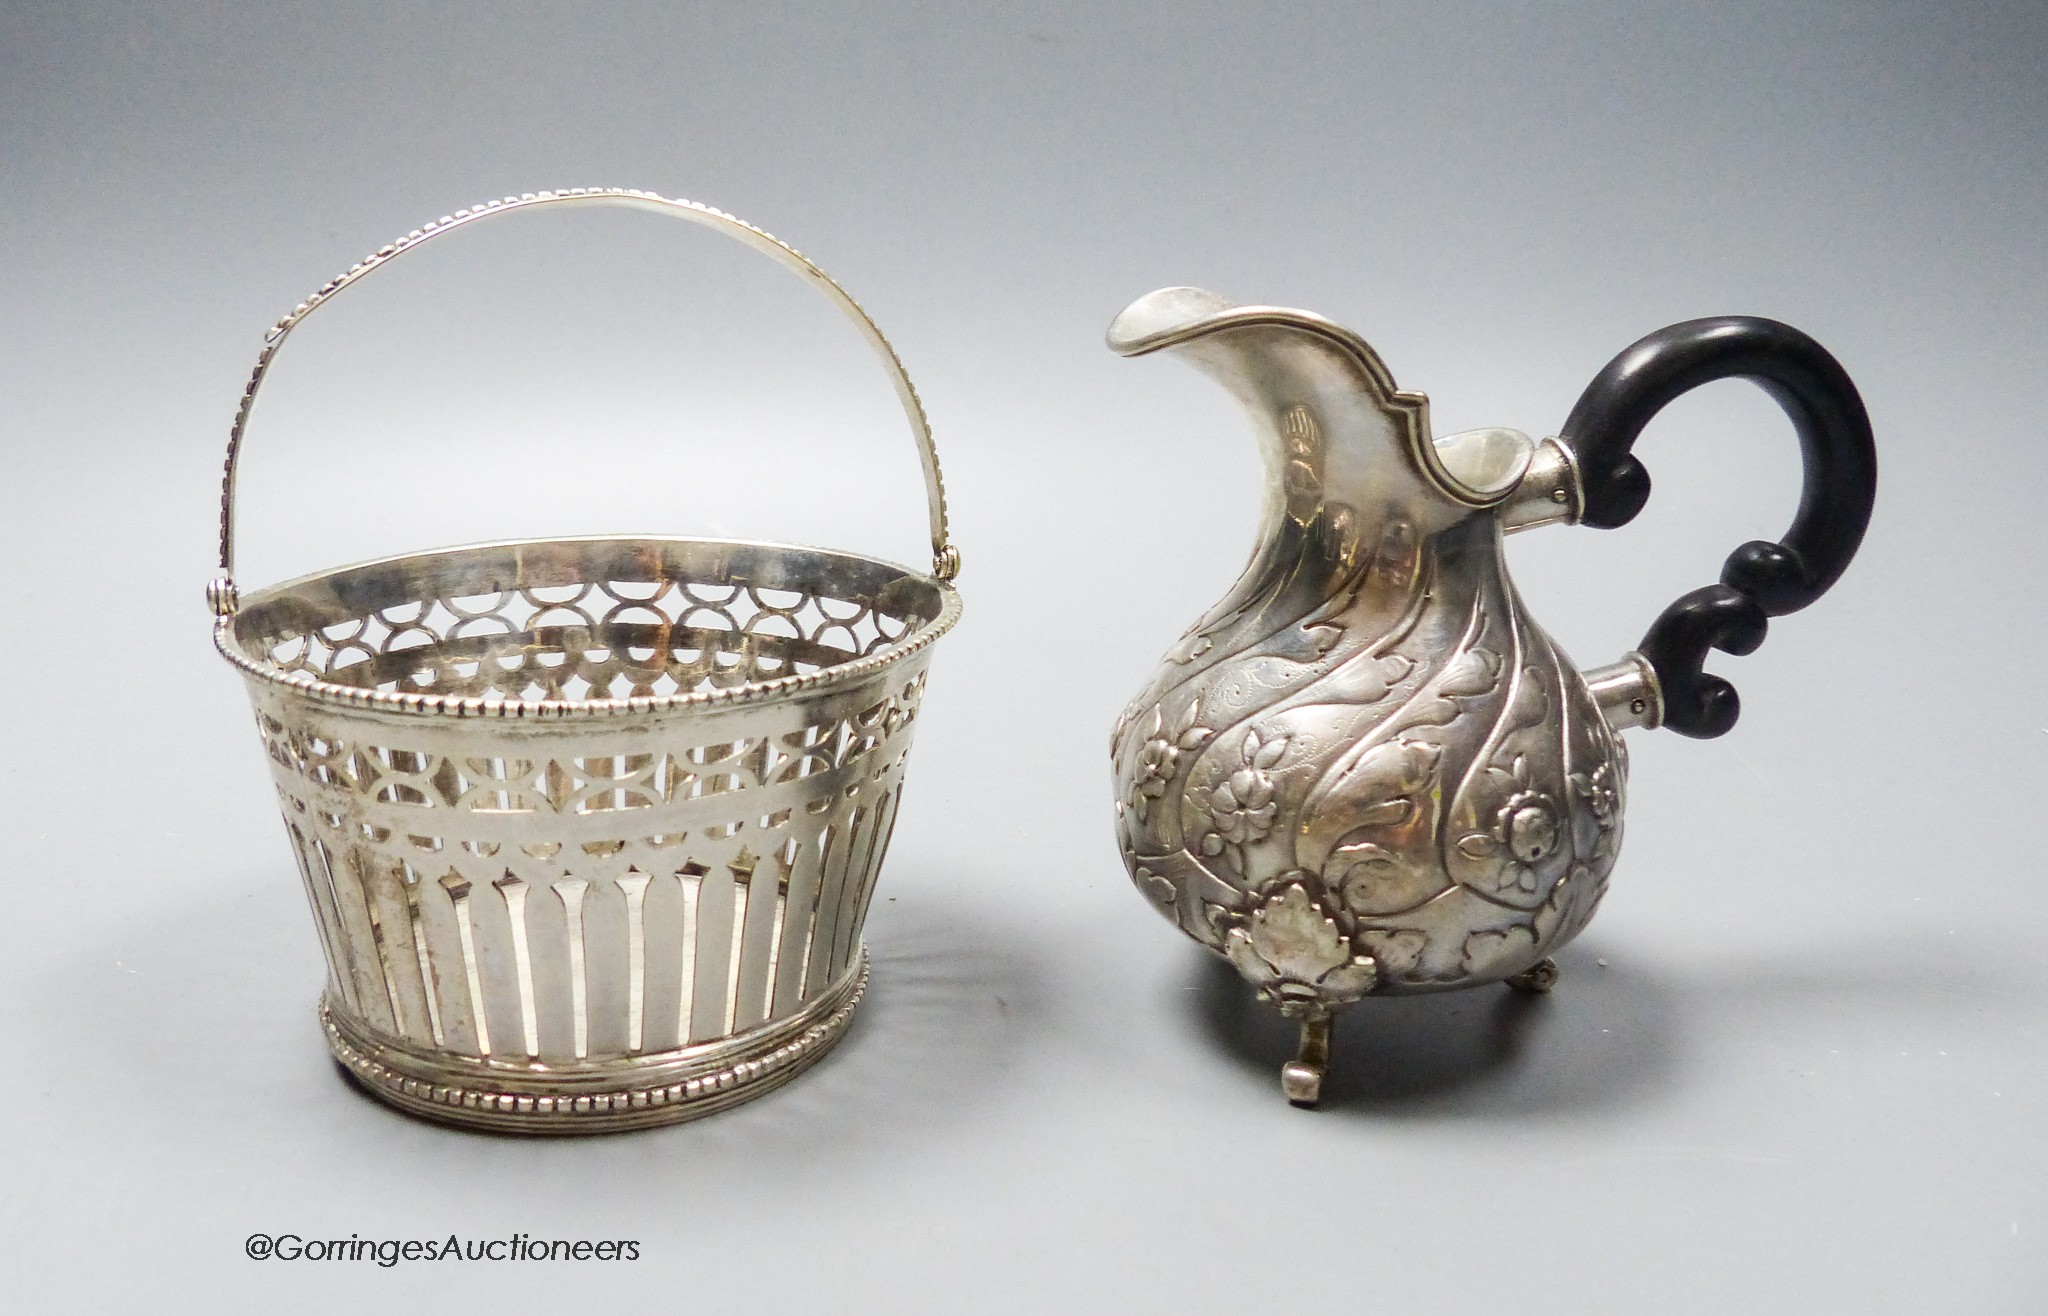 A 19th century Dutch white metal sugar basket (no liner), height 6cm and a Portuguese white metal cream jug, gross 7.5oz.